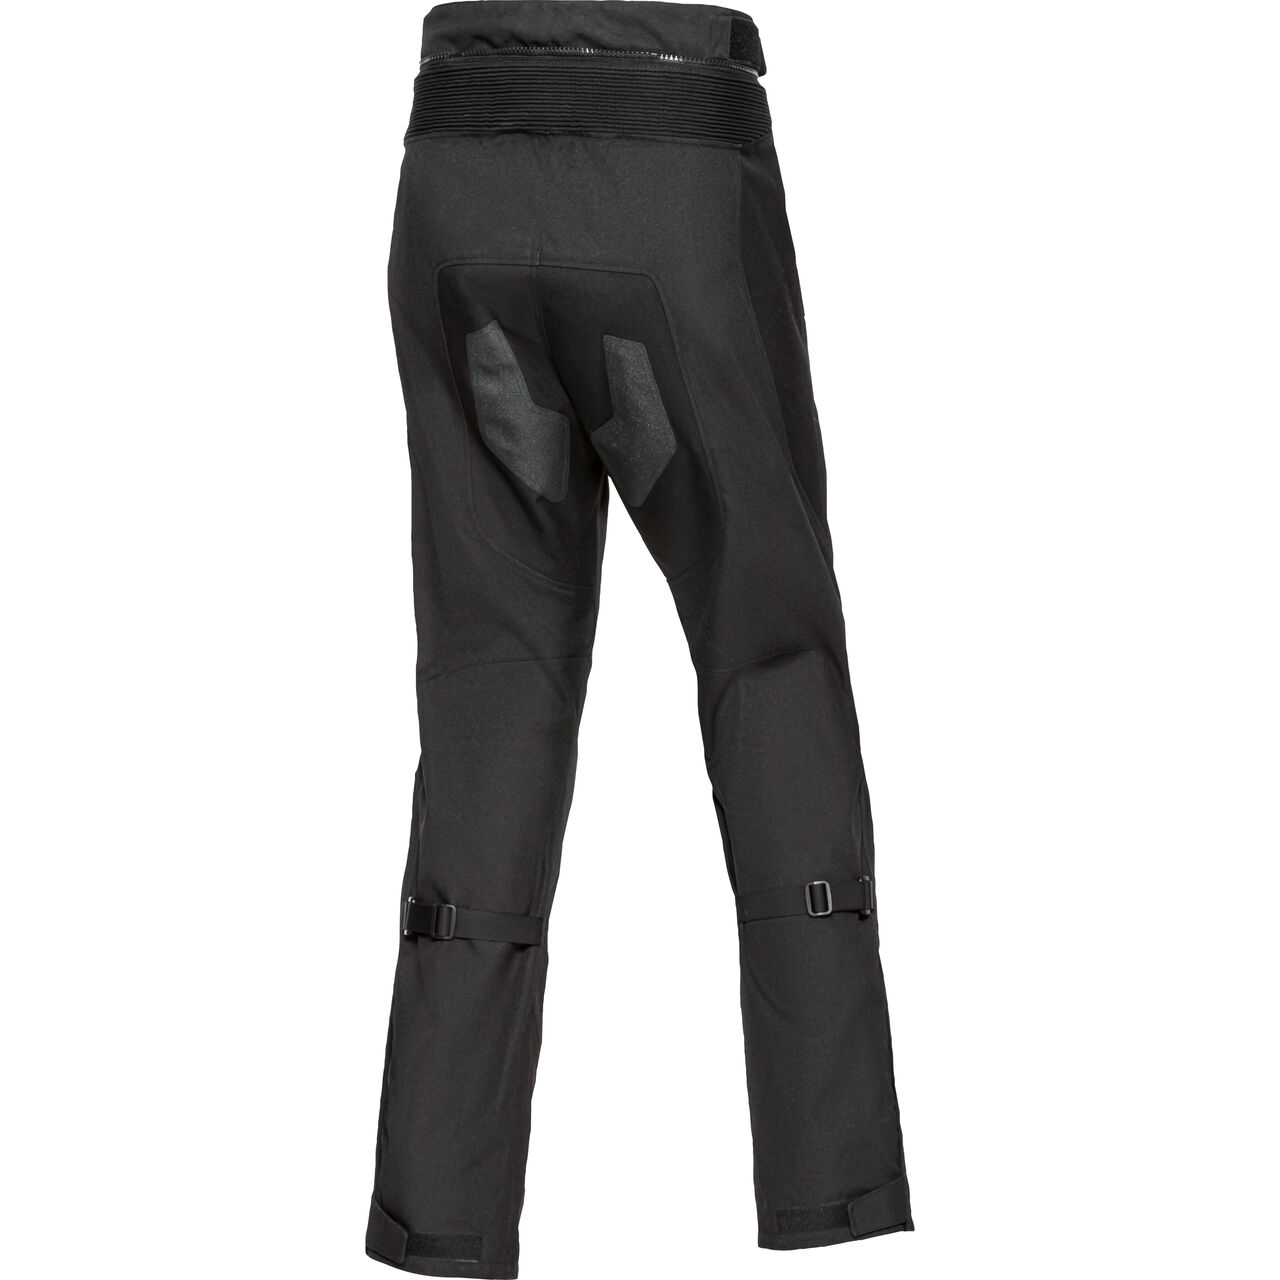 Cedar WP Textile trousers black XL (short)